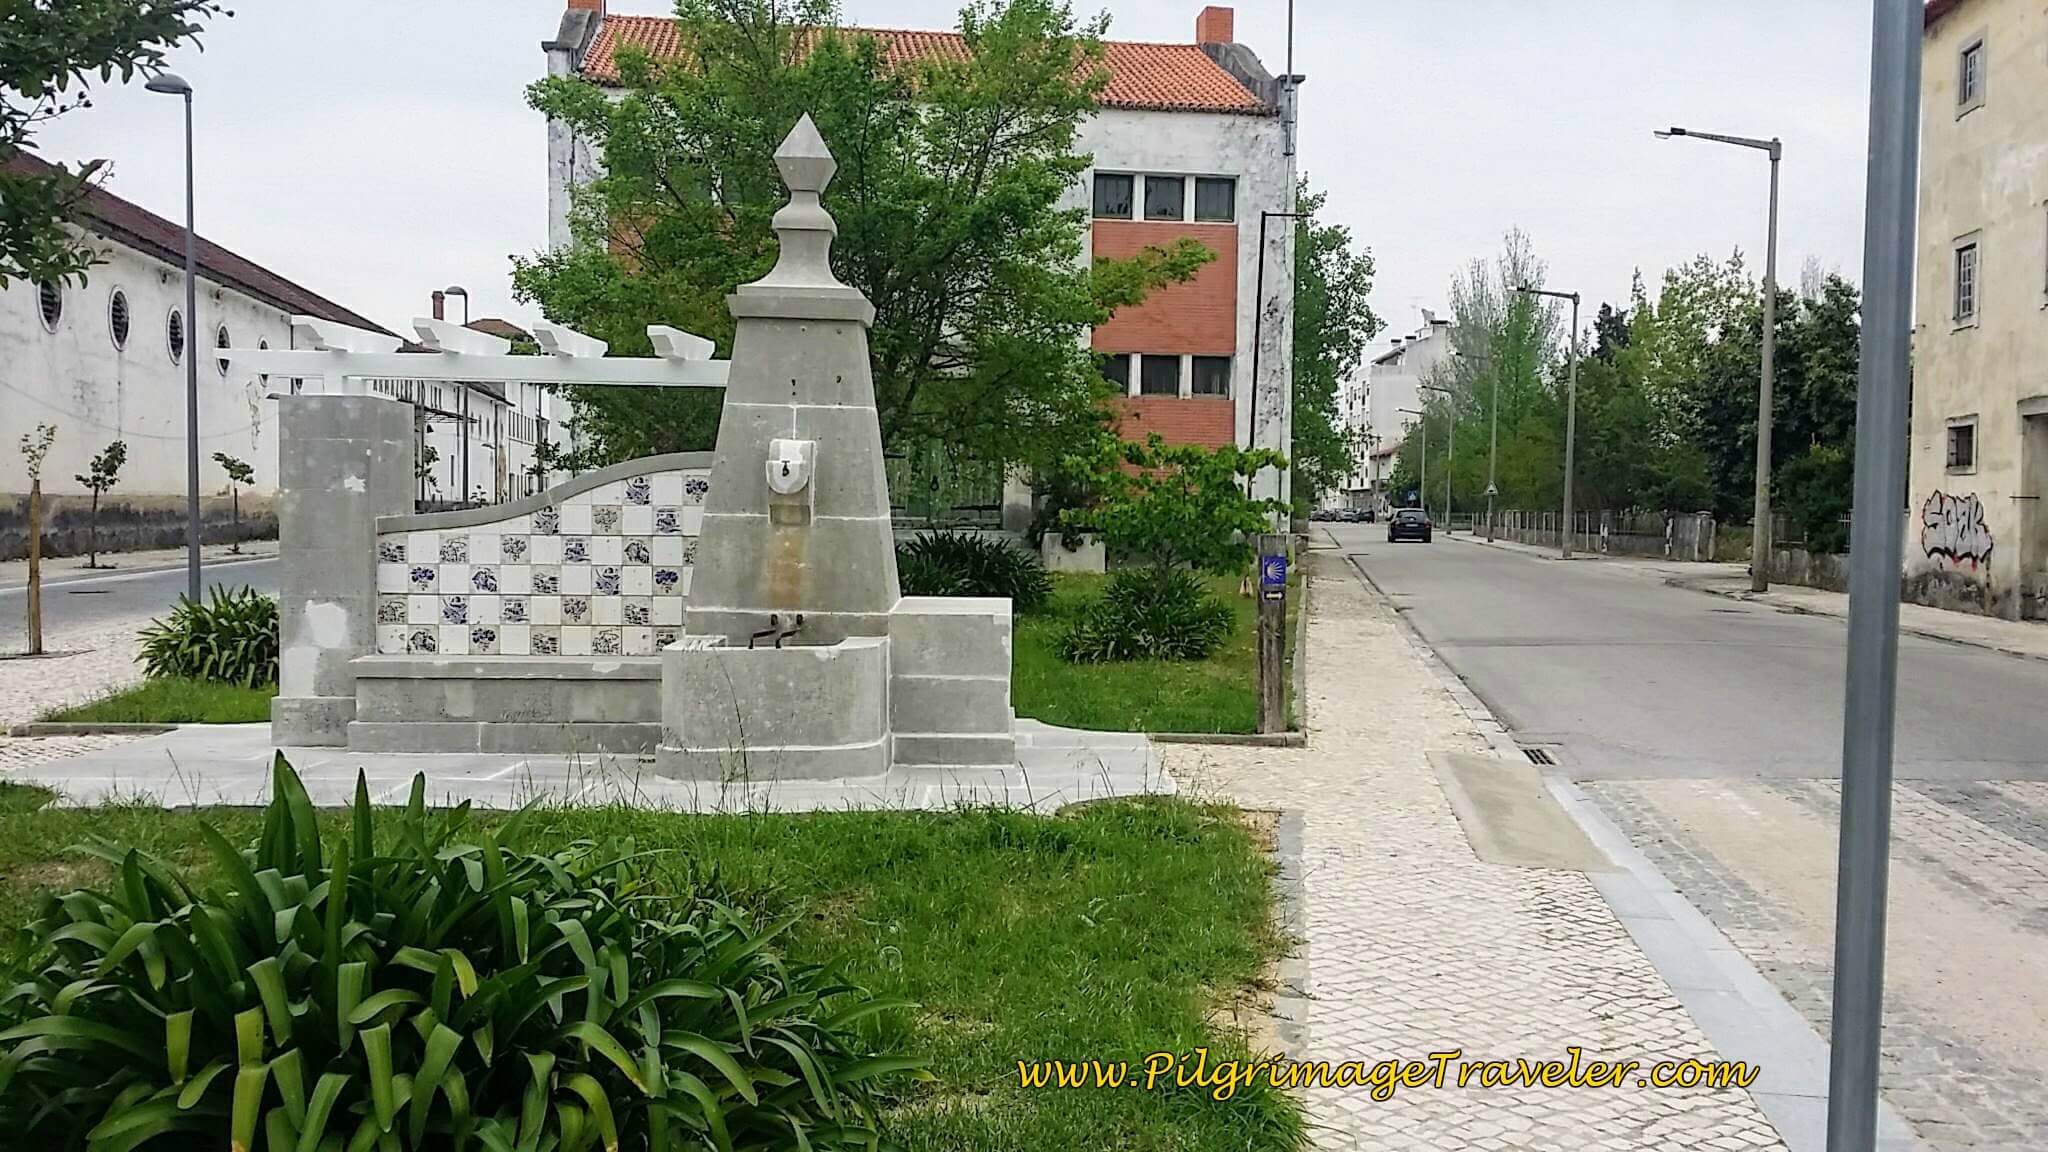 Right Turn at Fountain onto Rua Visc. Valdoeiro in Mealhadam Portugal